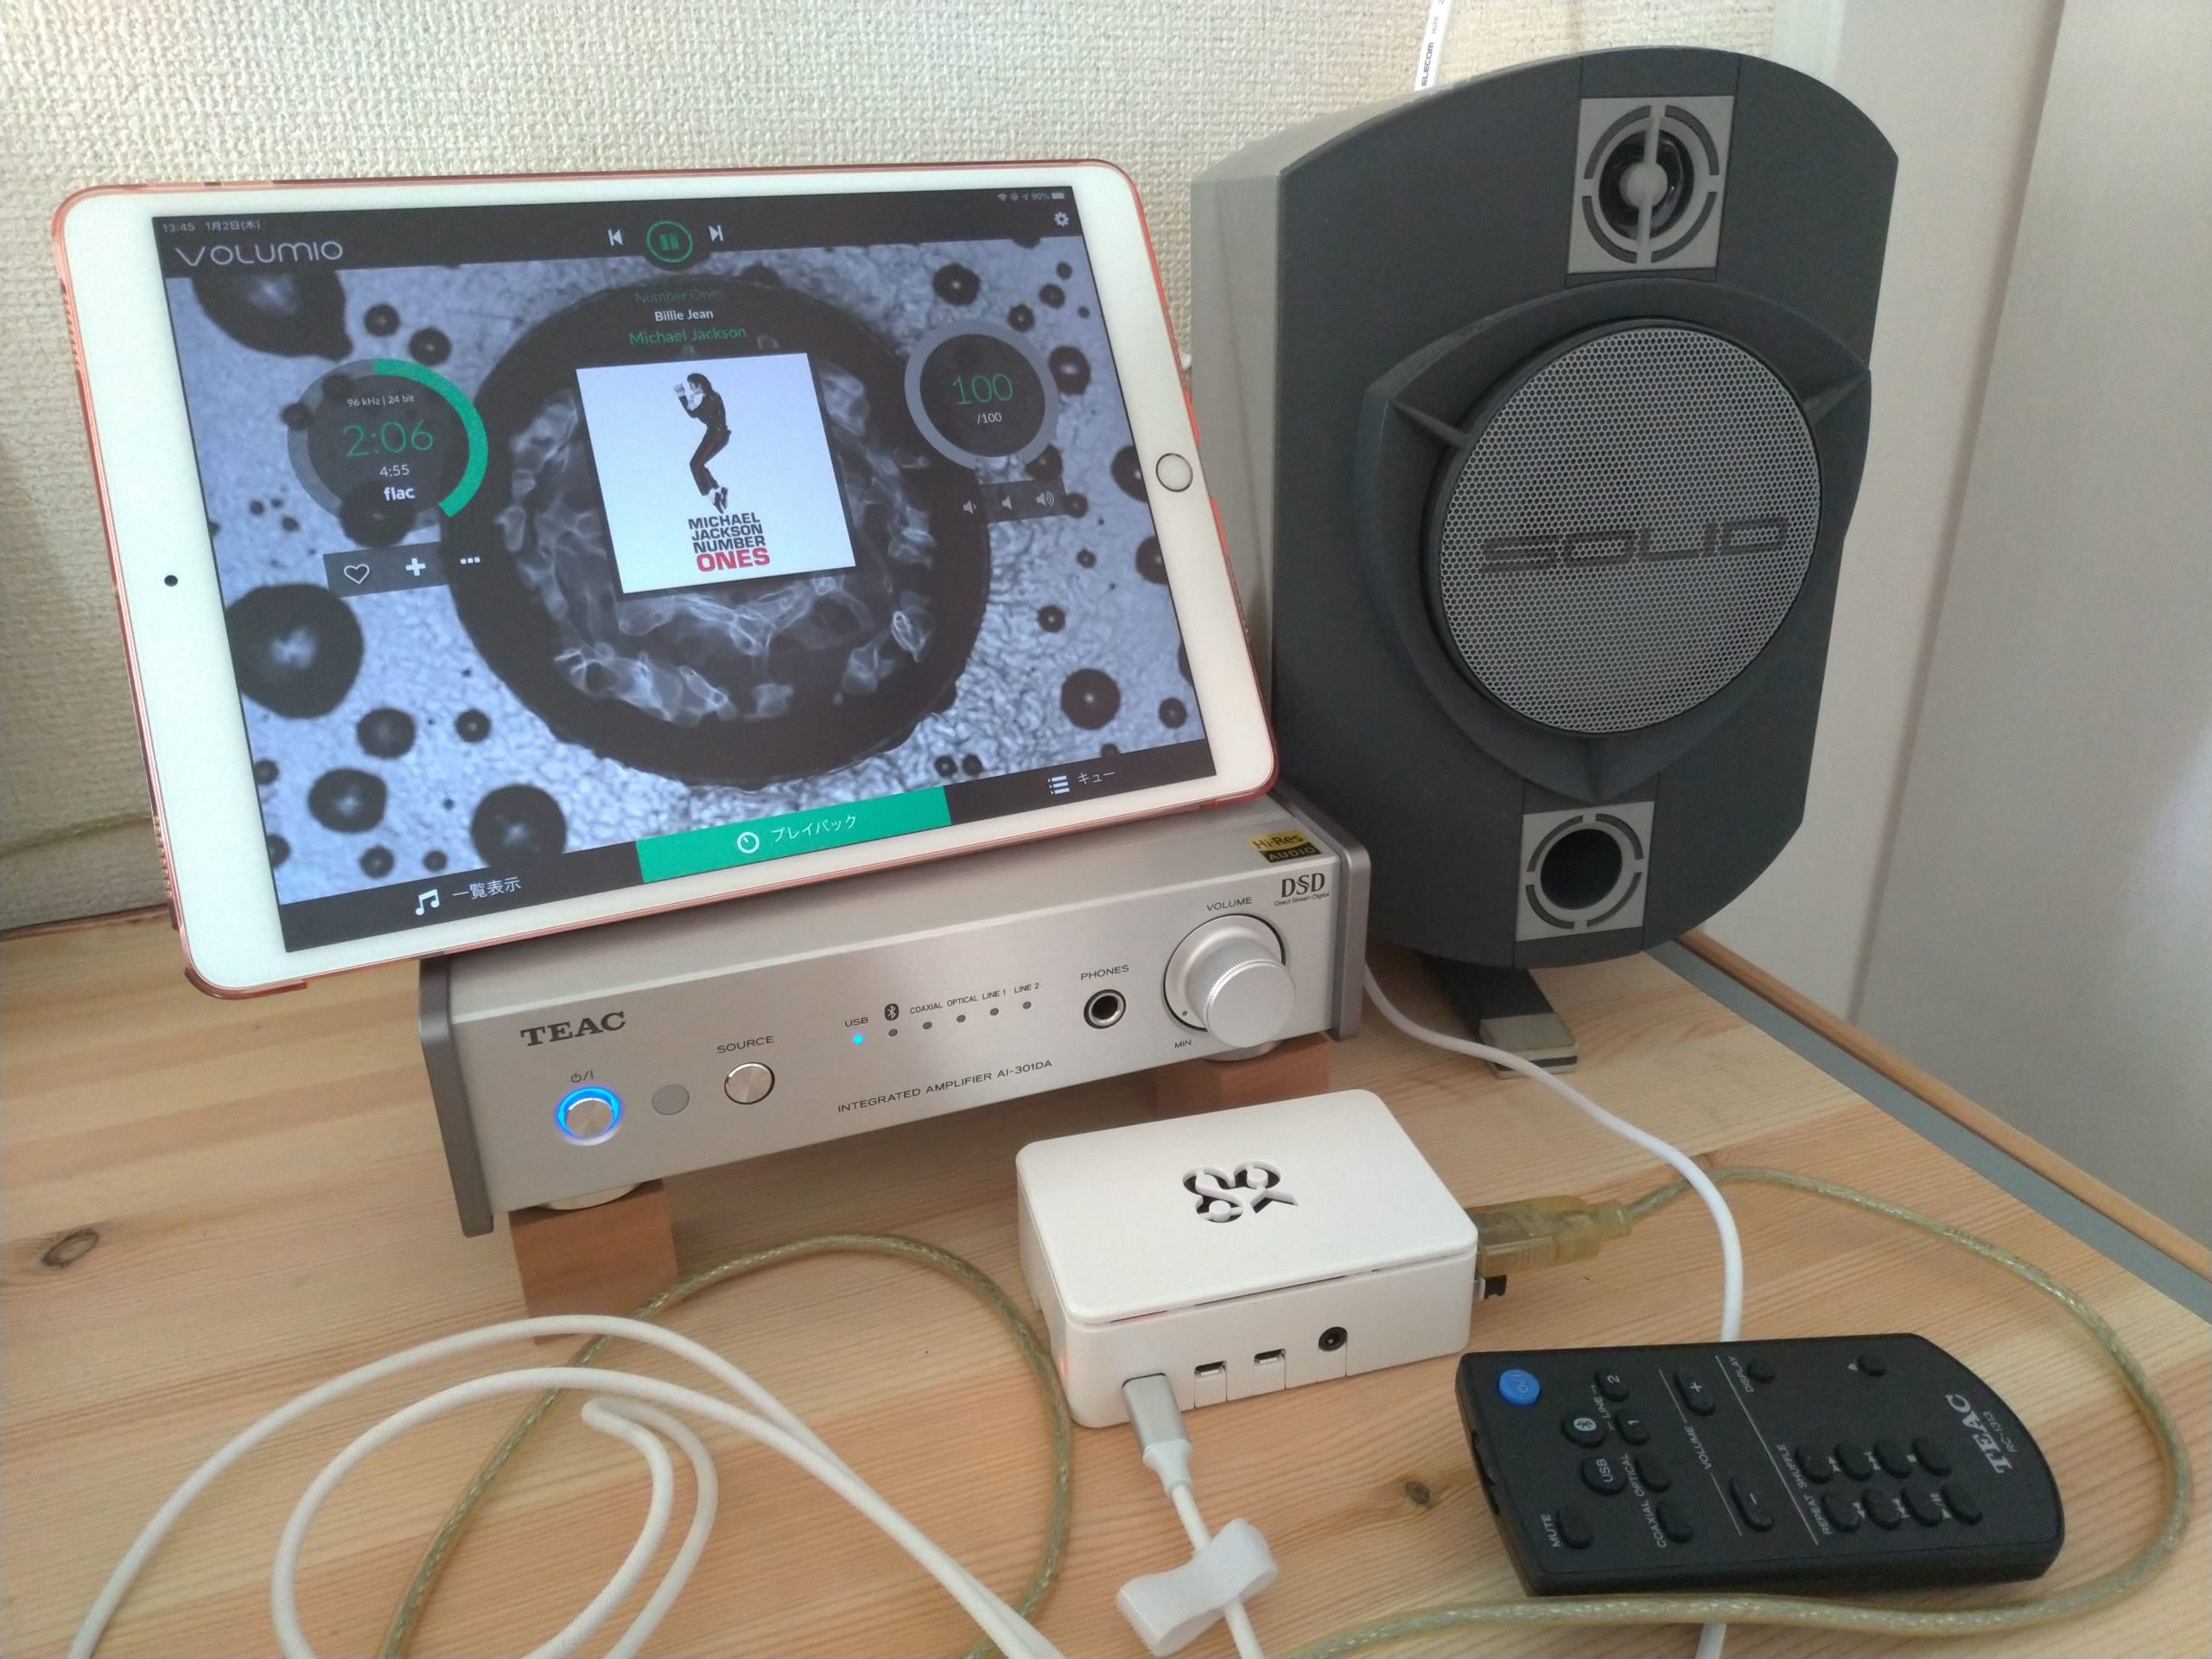 Raspberry Piを使ってハイレゾ対応ミュージックサーバを作ってみました